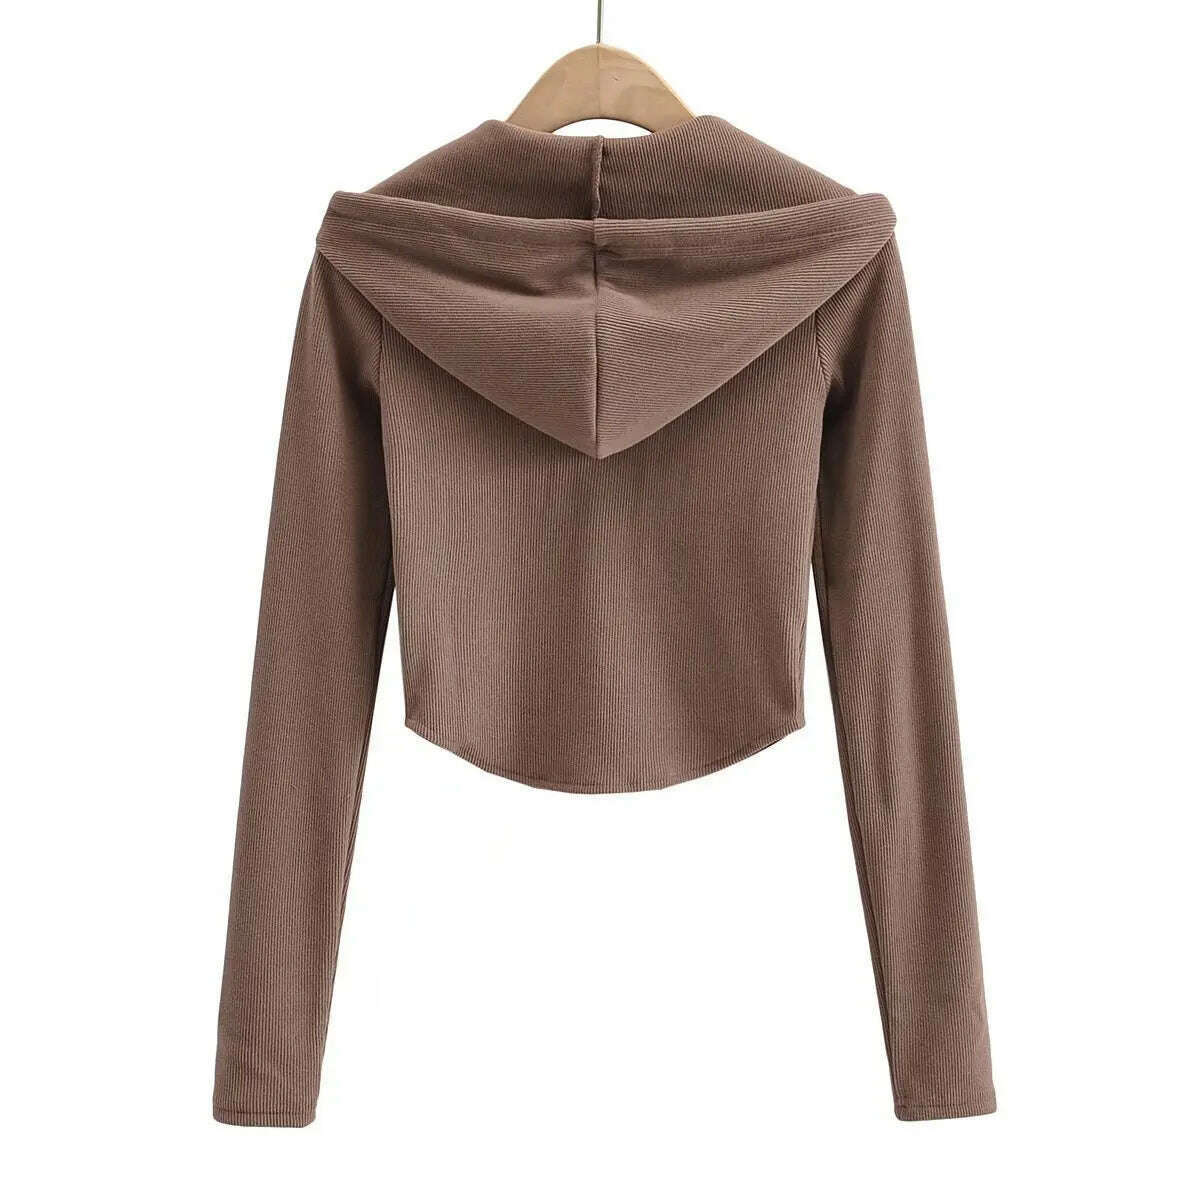 KIMLUD, Fall fashion cropped hoodies women zip up hoodie korean fashion sweatshirts hooded cute long sleeve crop top sexy curve hem, KIMLUD Womens Clothes